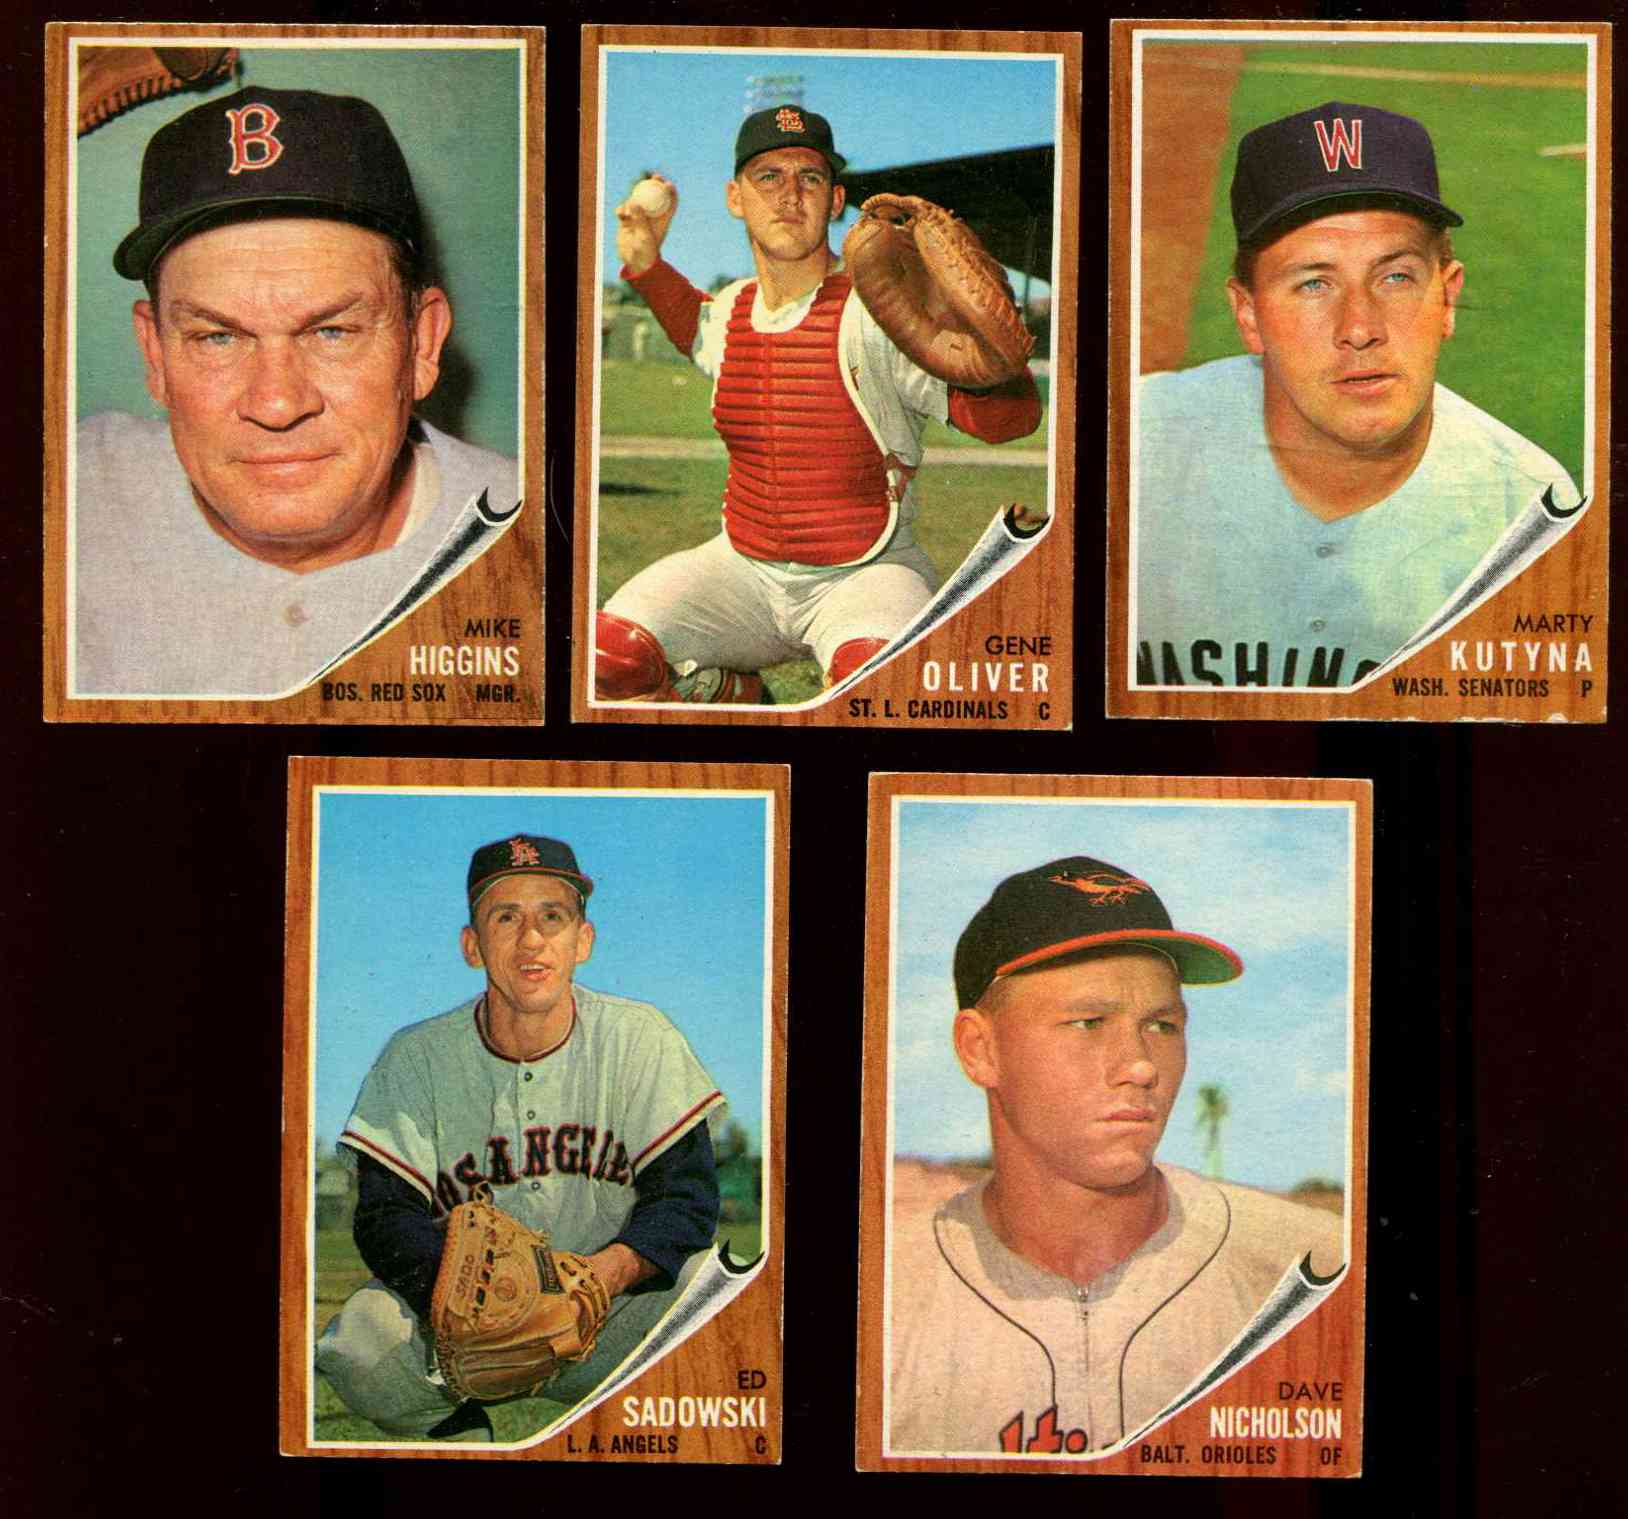 1962 Topps #569 Ed Sadowski SHORT PRINT HIGH # (Angels) Baseball cards value